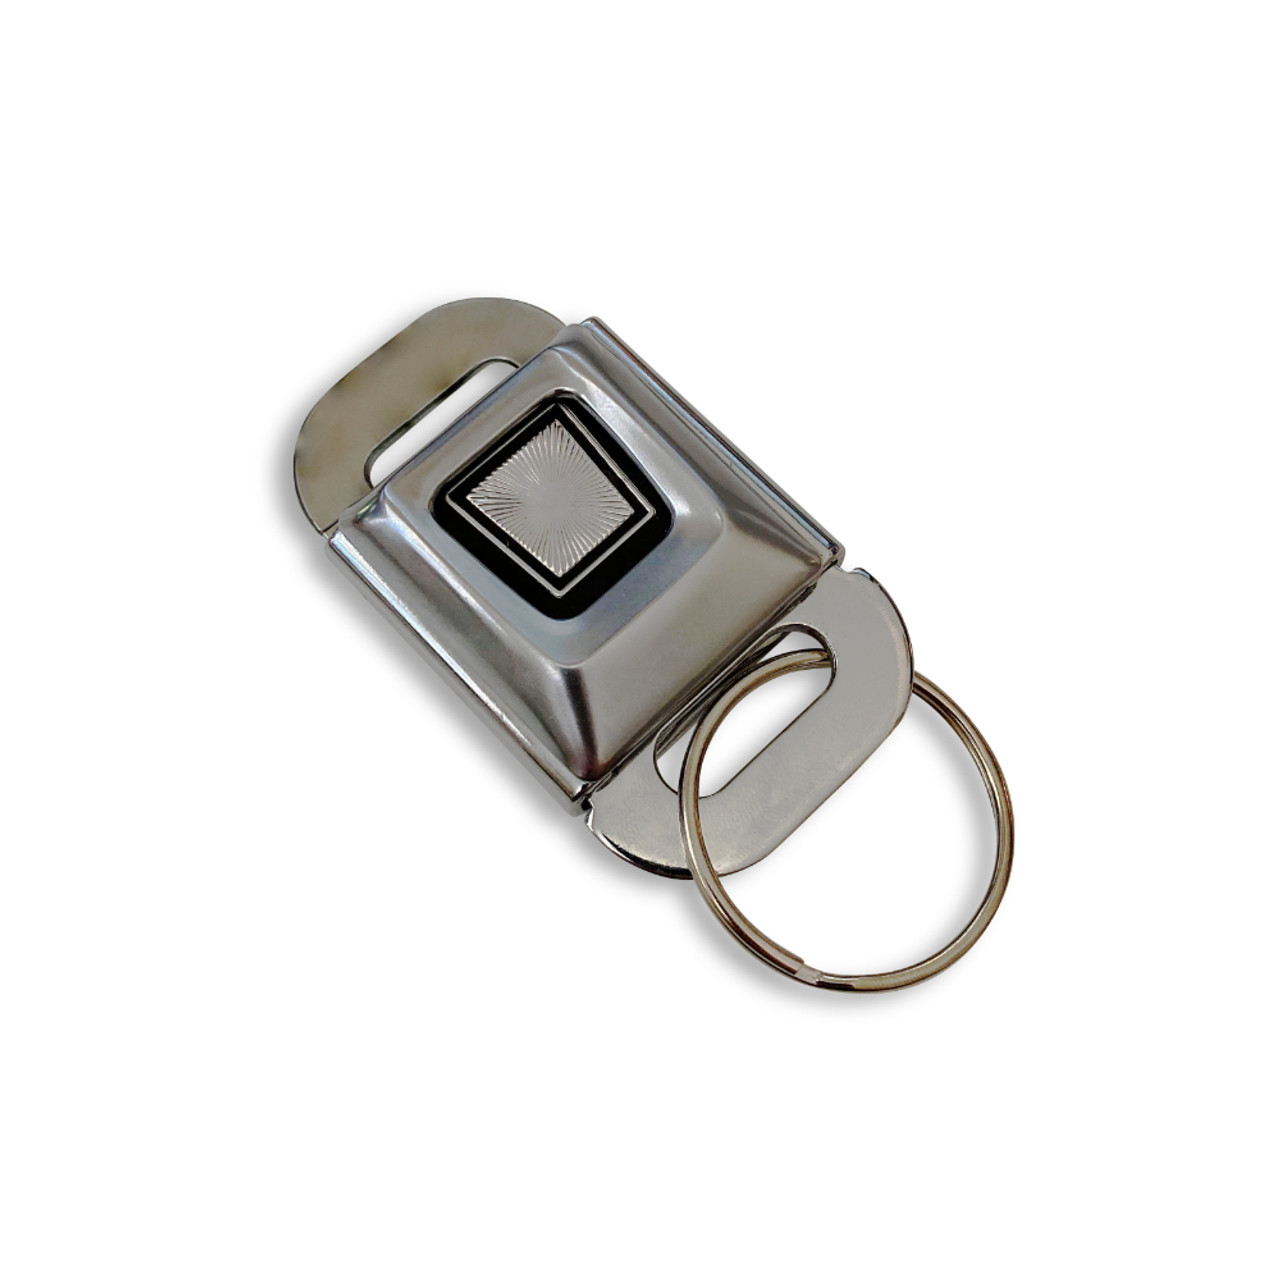 Seat Belt Keychain from Seat Belt Extender Pros